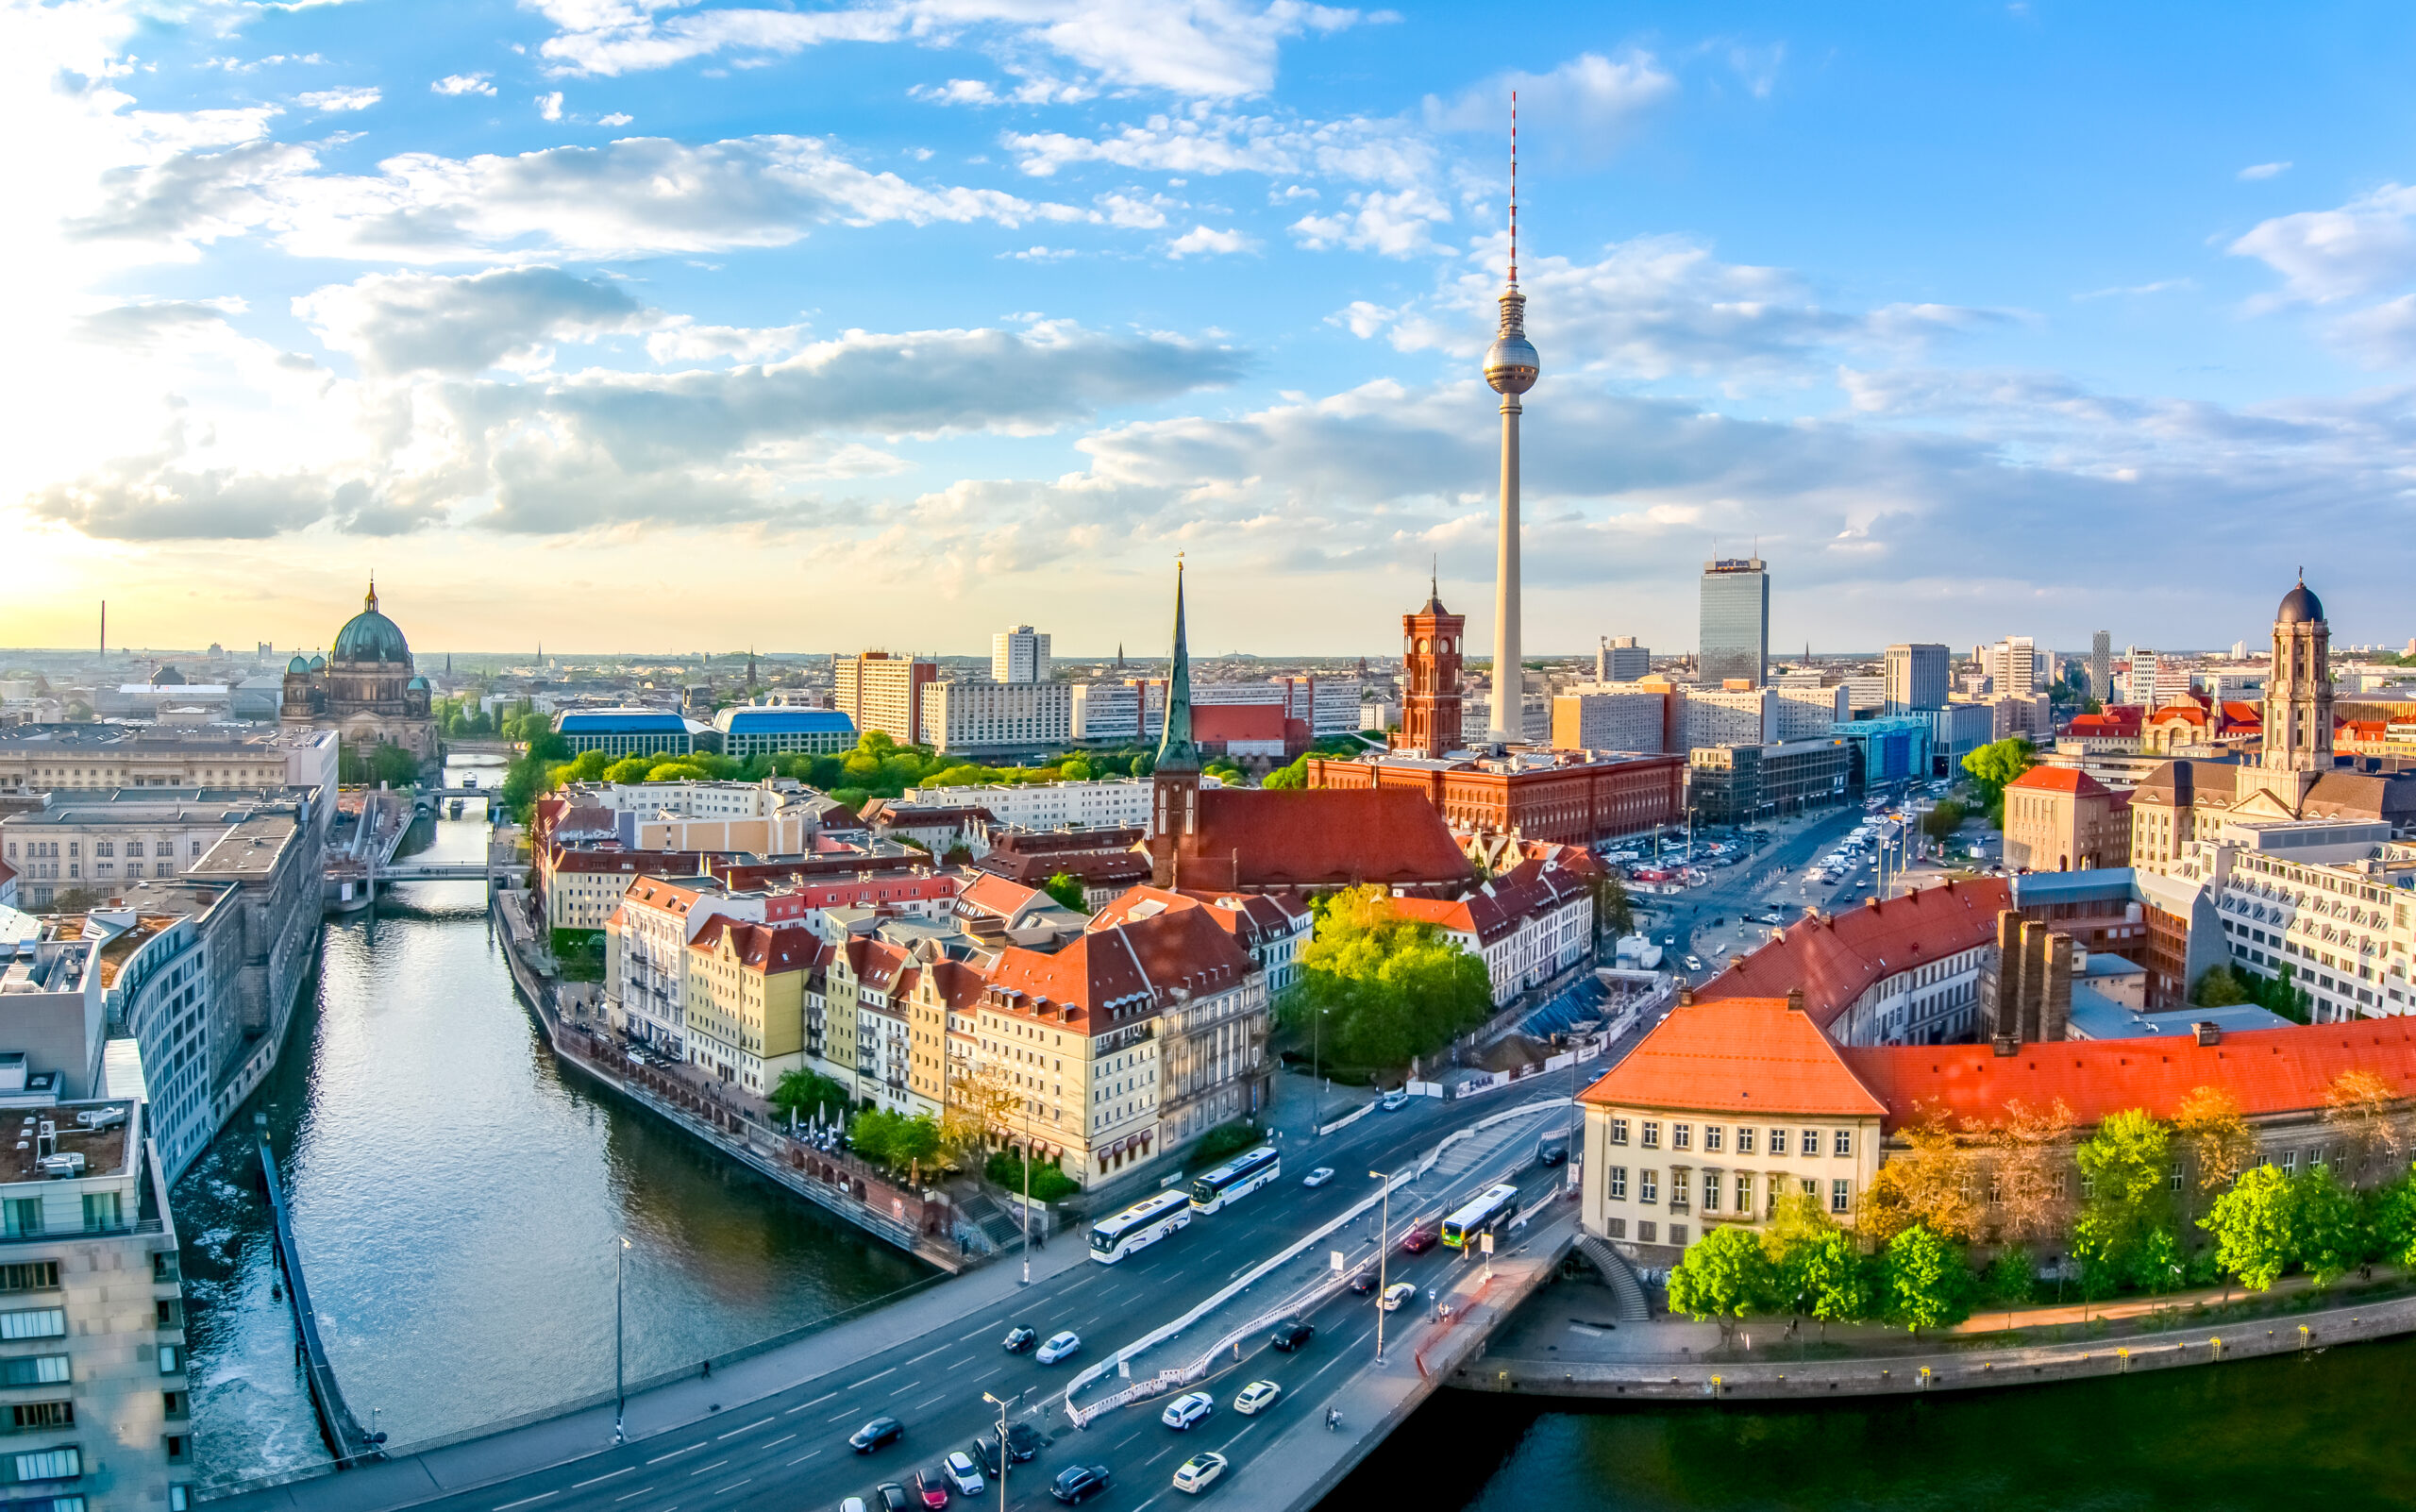 Berlin, Germany (Photo Credit: Mistervlad / Shutterstock)